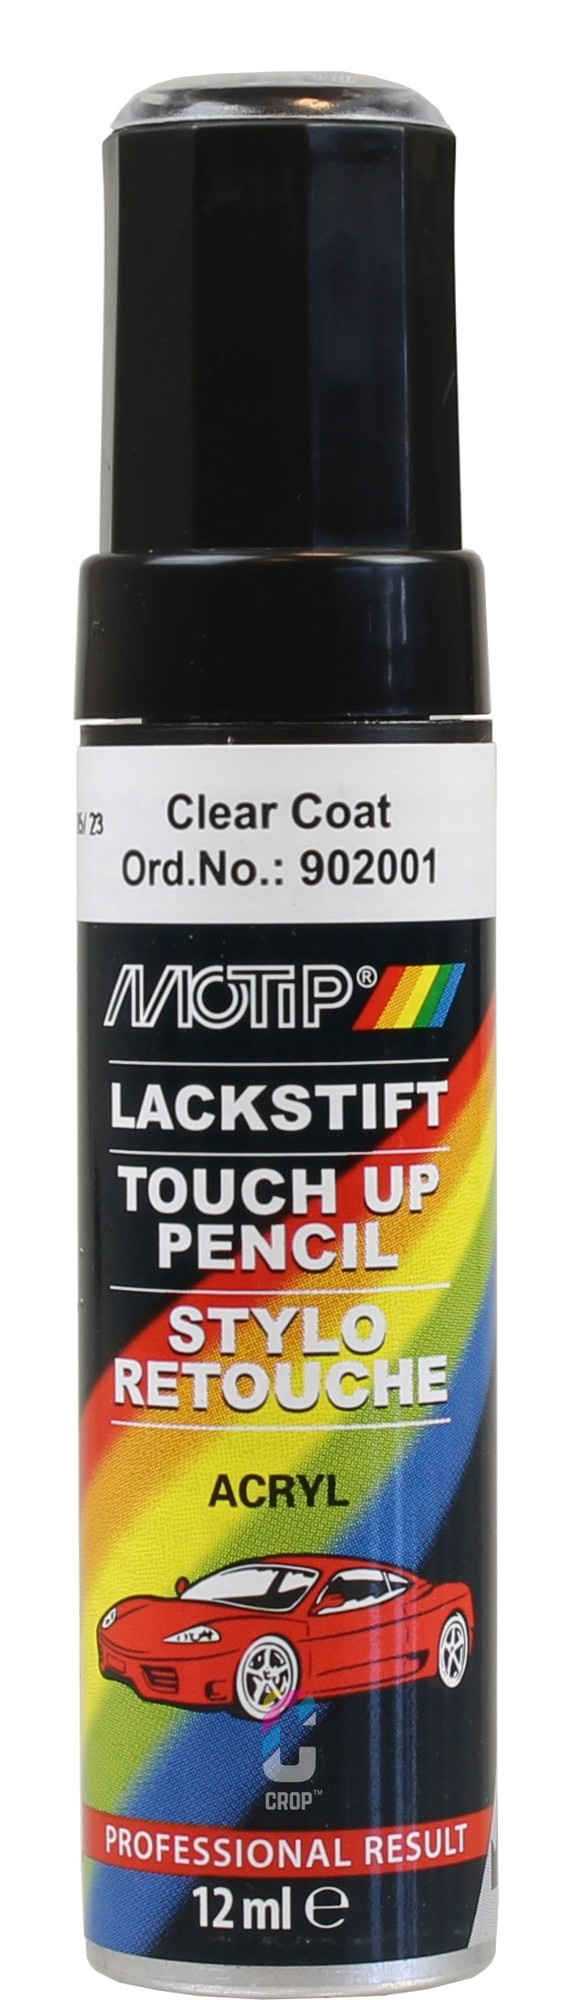 MOTIP 04124 1K Clear Coat High Gloss